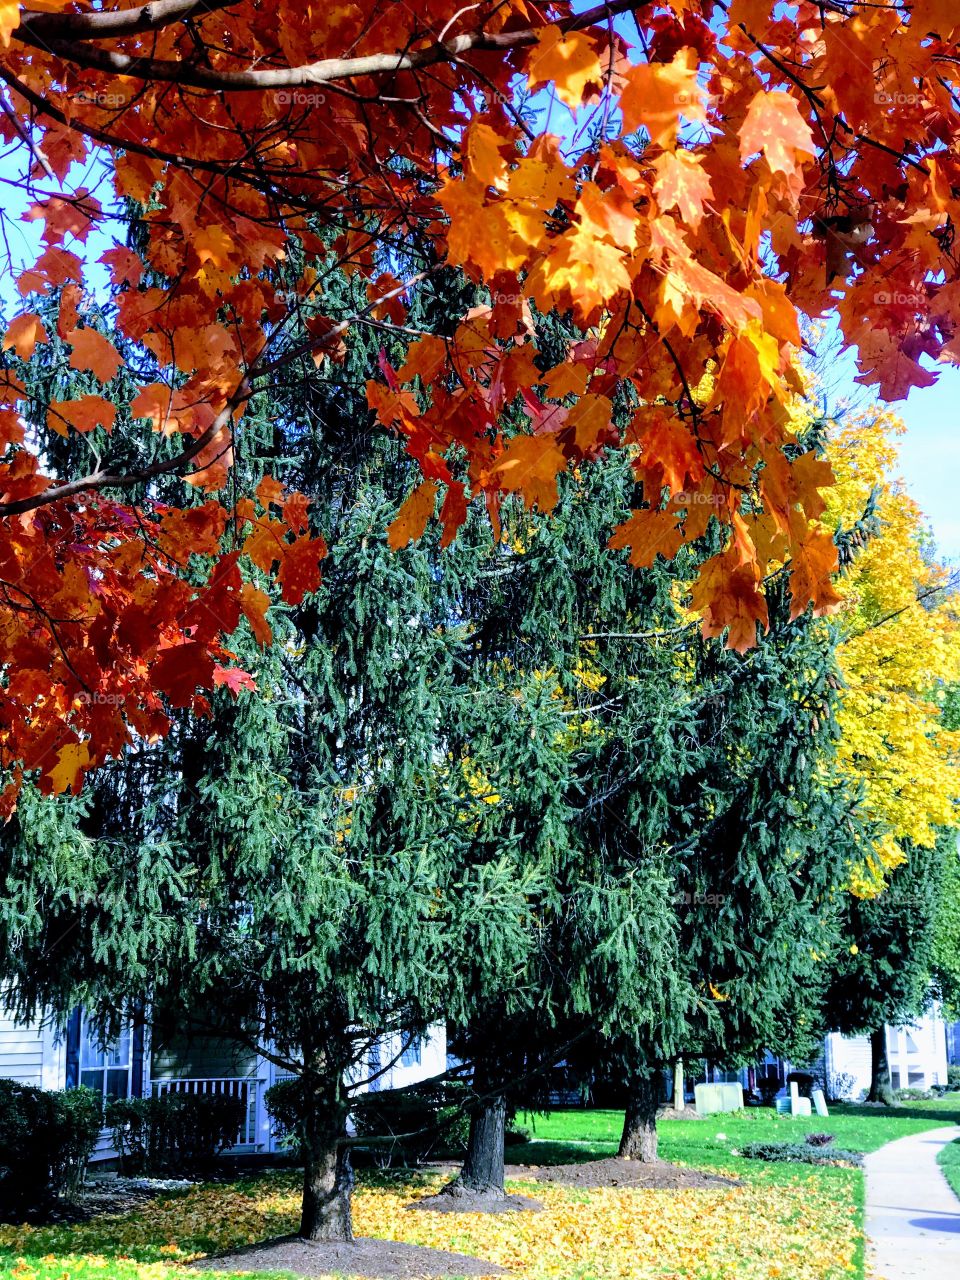 Fall Trees